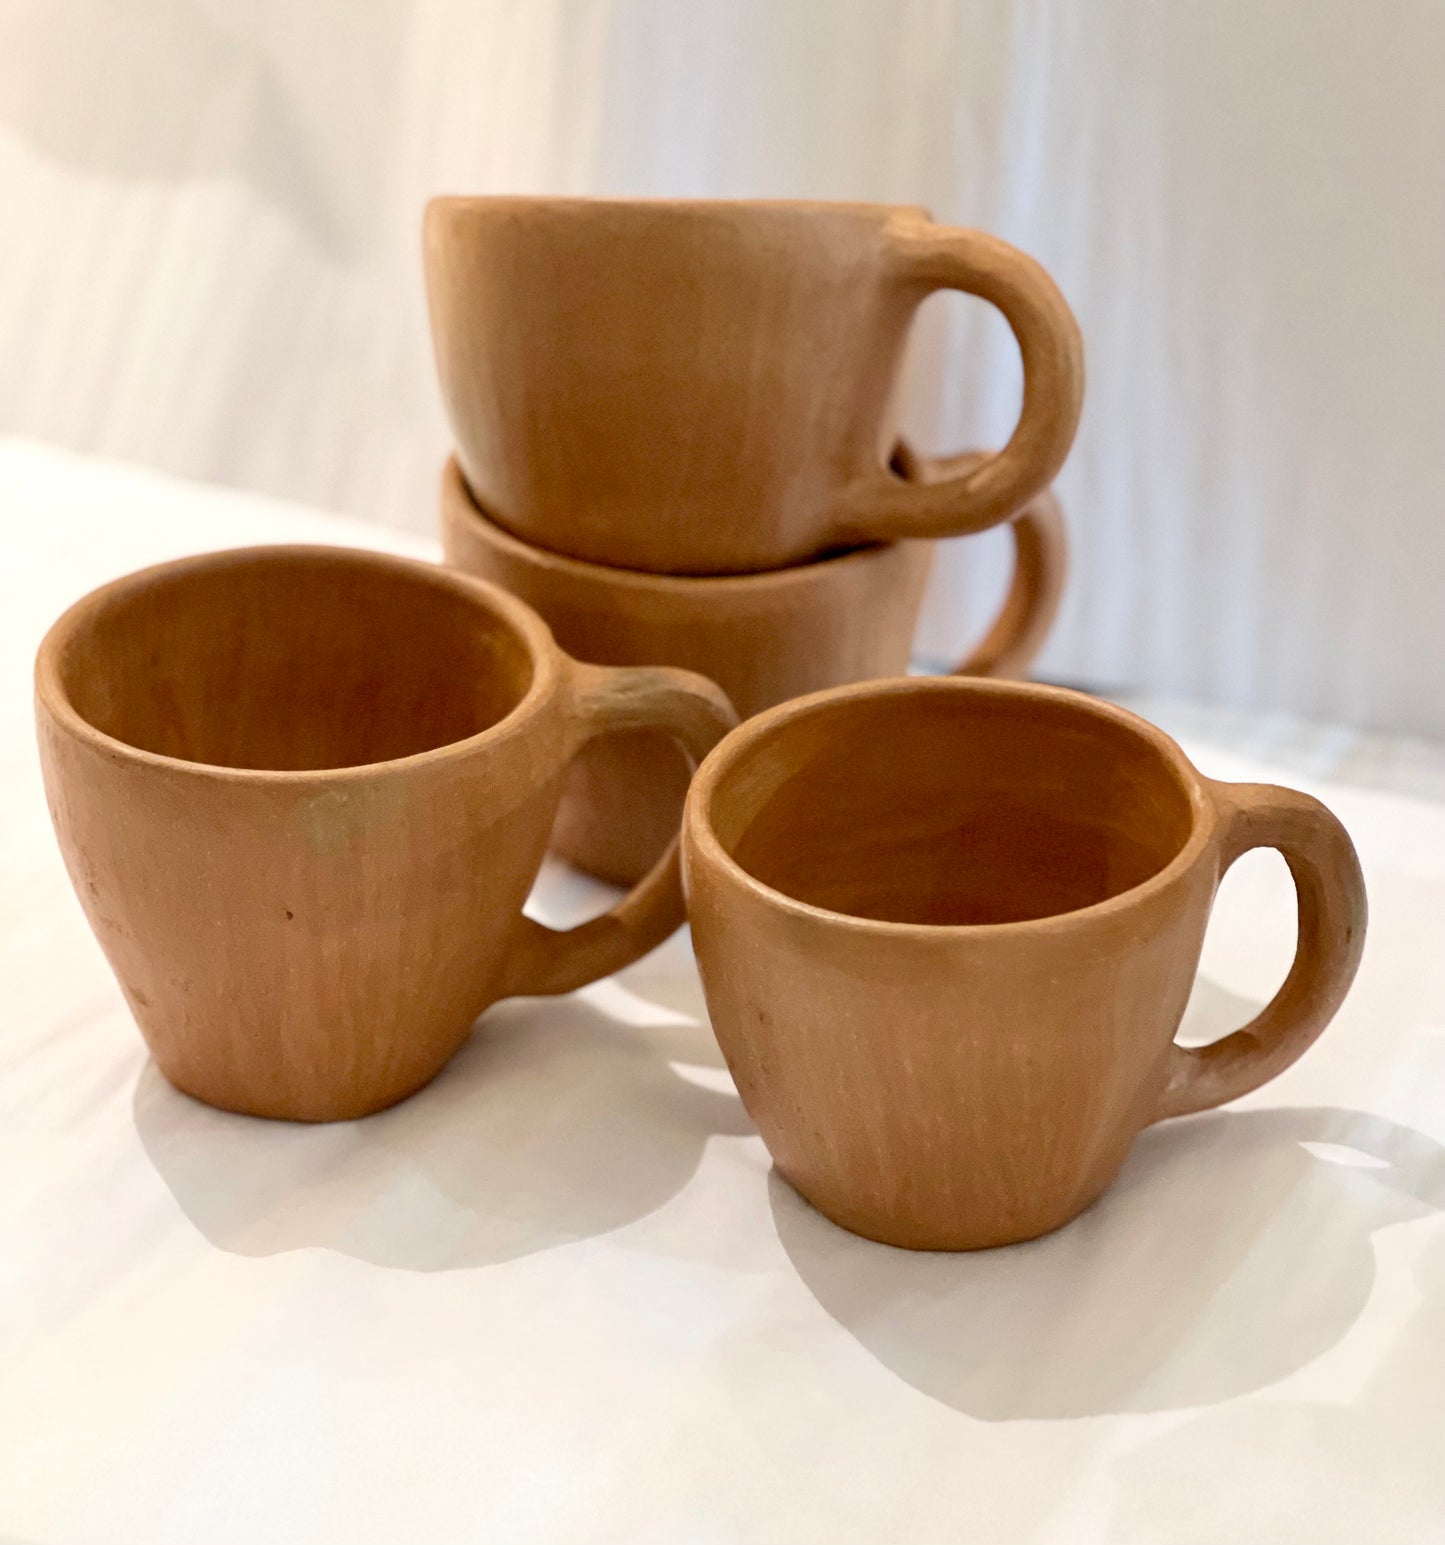 Oaxaca Clay Pottery Coffee Mugs - set of 4